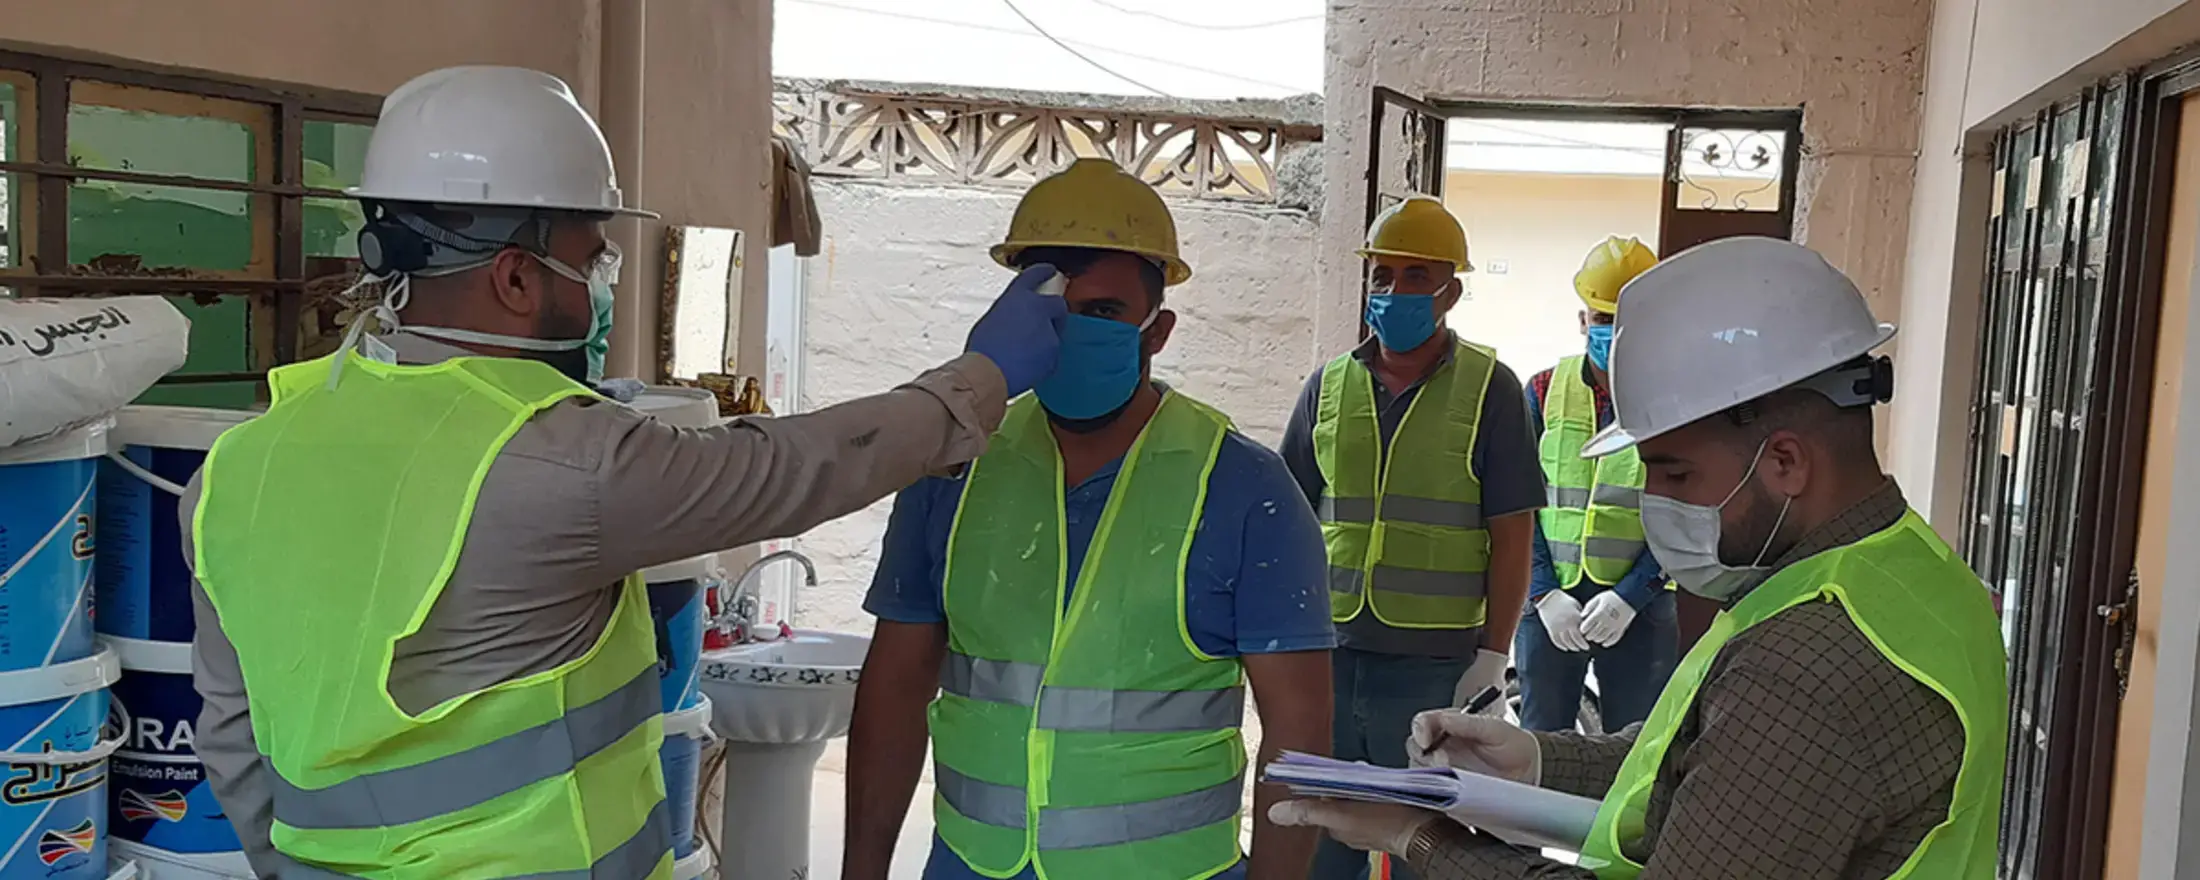 UN-Habitat workers undergoing through temperature check on entering construction site in Mosul